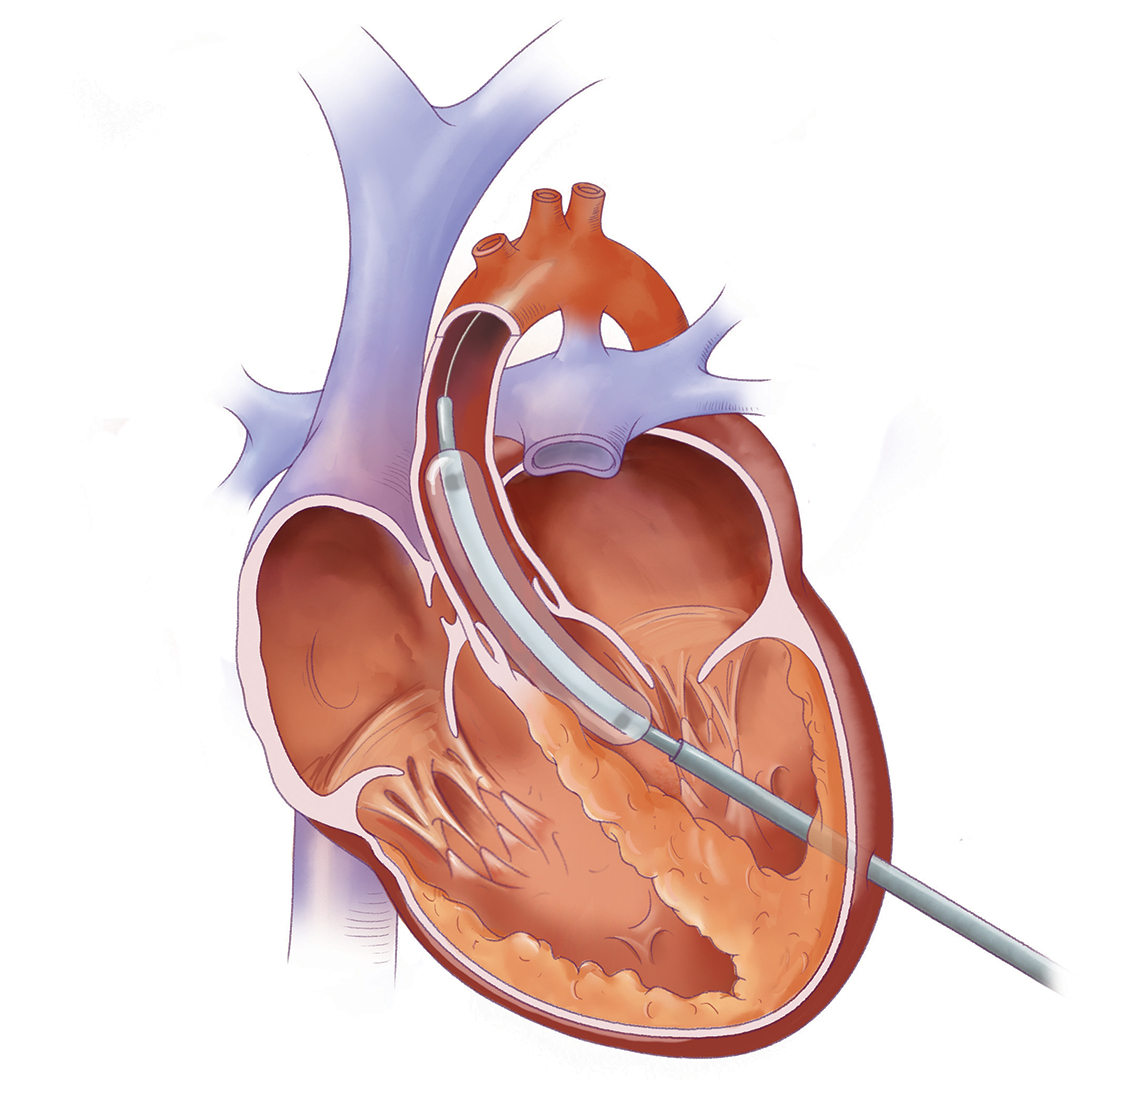 Heart cross section with balloon catheter